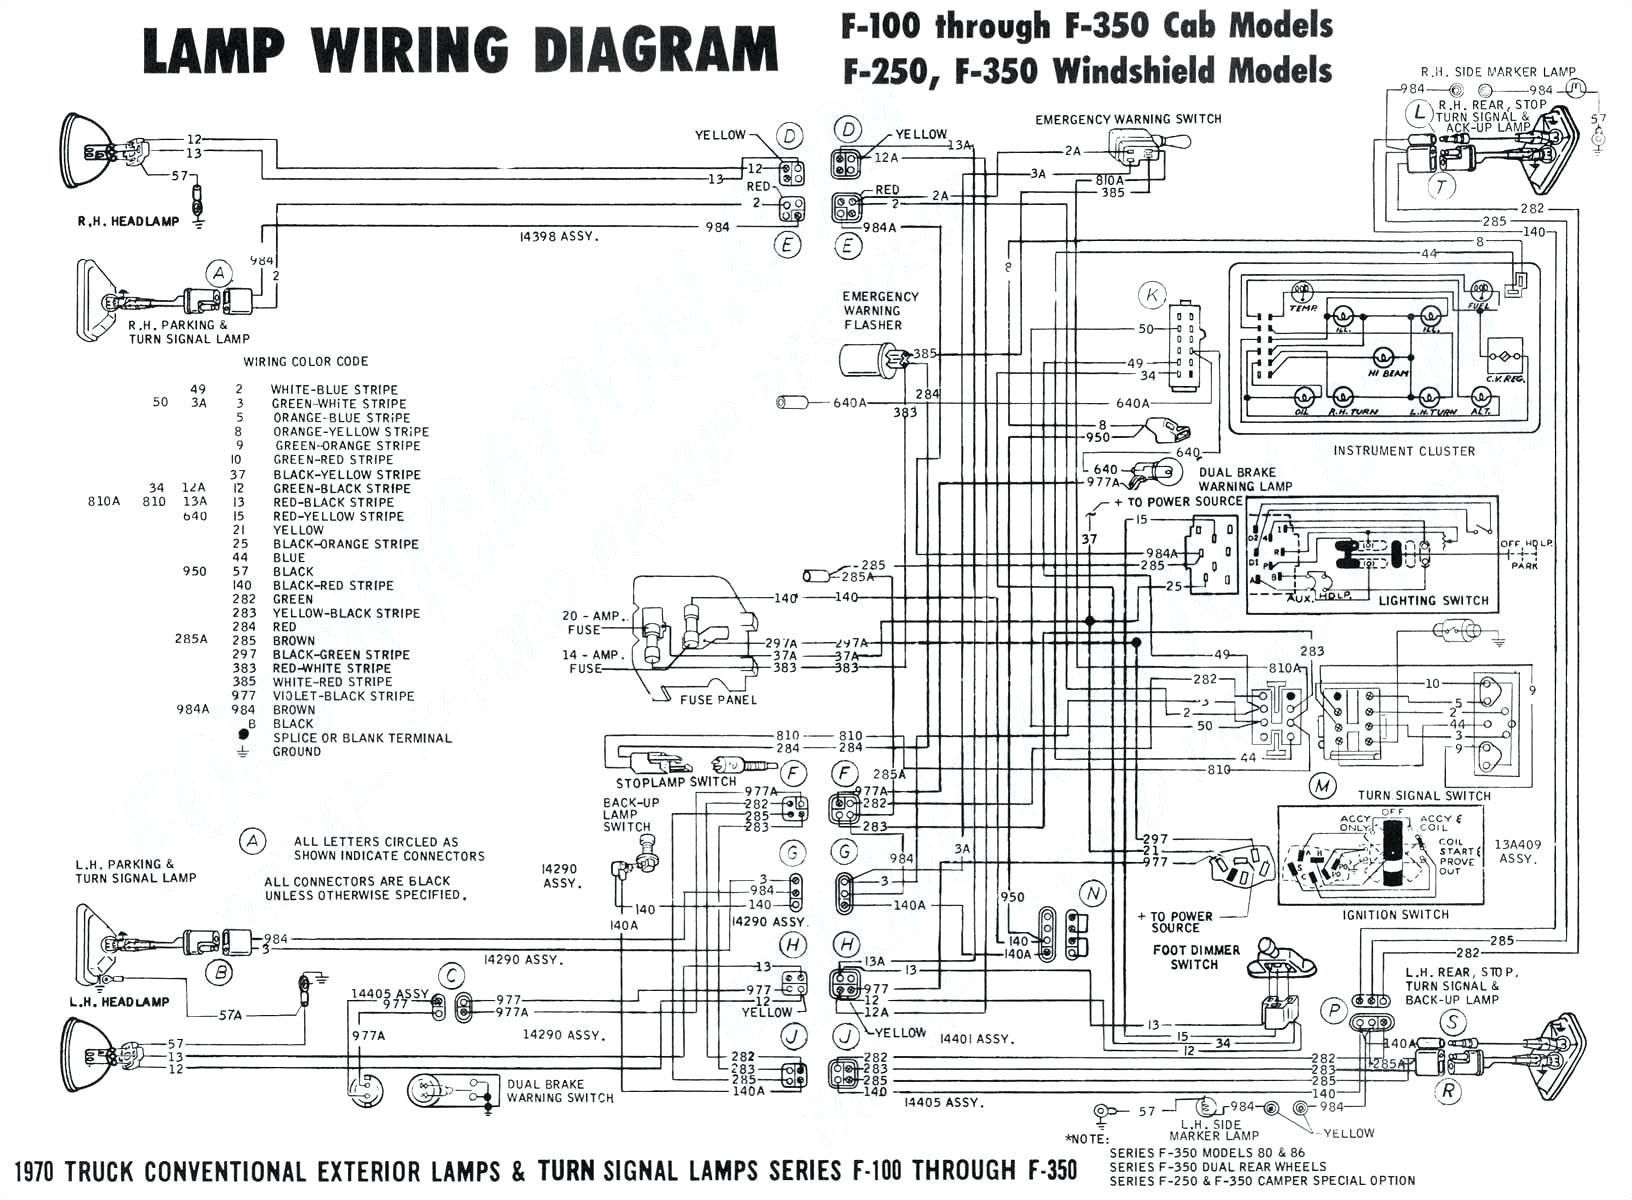 Power Window Wiring Diagram ford F 250 A C Pressor Fuse Moreover 1999 Honda Civic Window Wiring